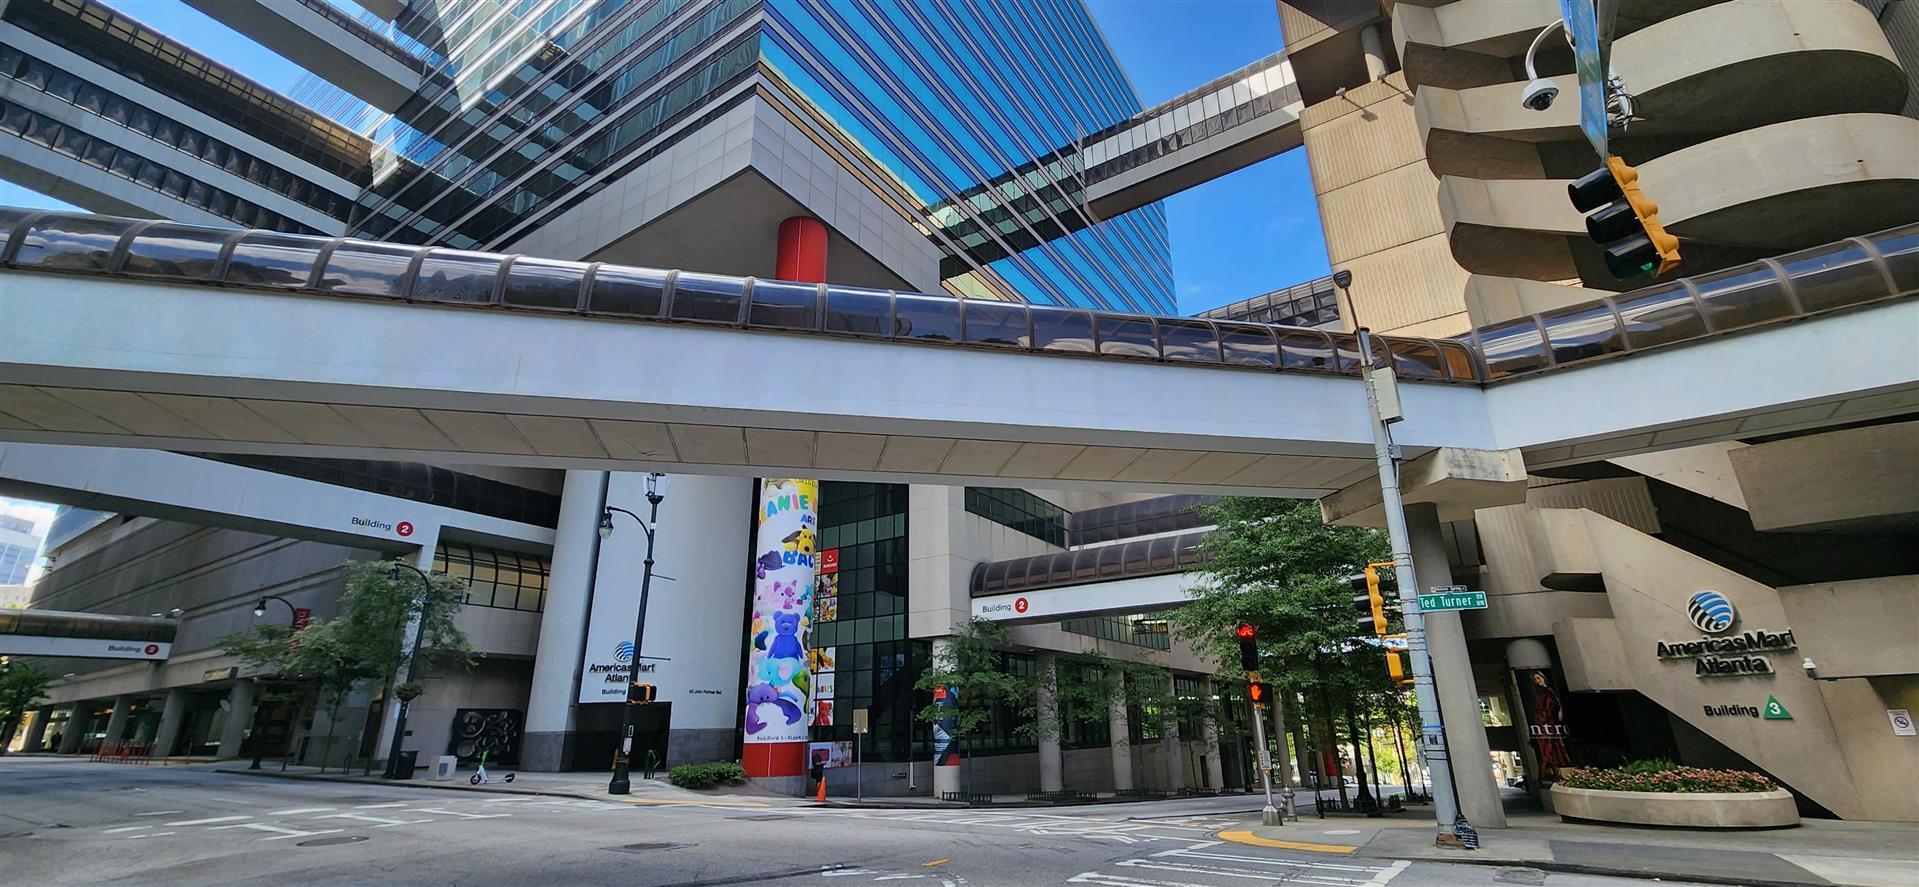 Atlanta Convention Center at AmericasMart in Atlanta, GA